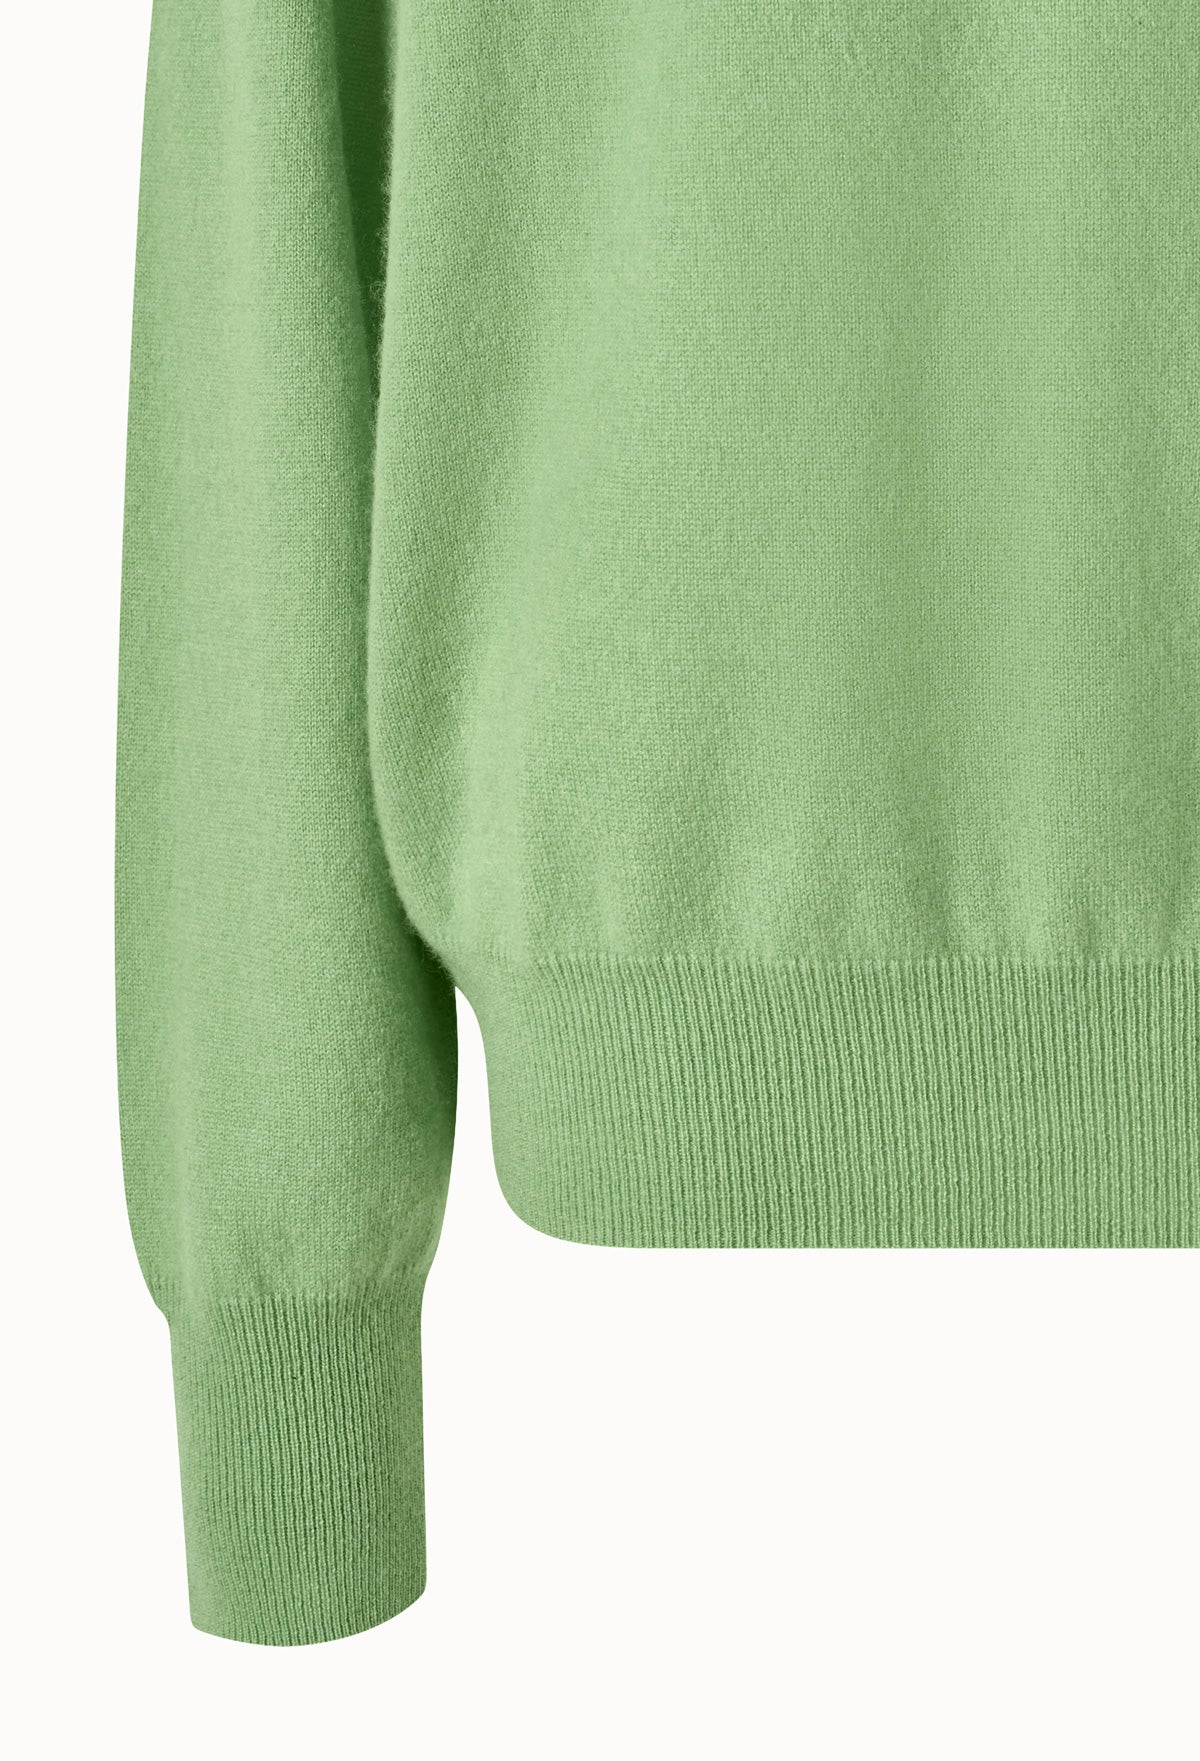 Cashmere 100 Raglan Turtleneck Sweater In Apple Green